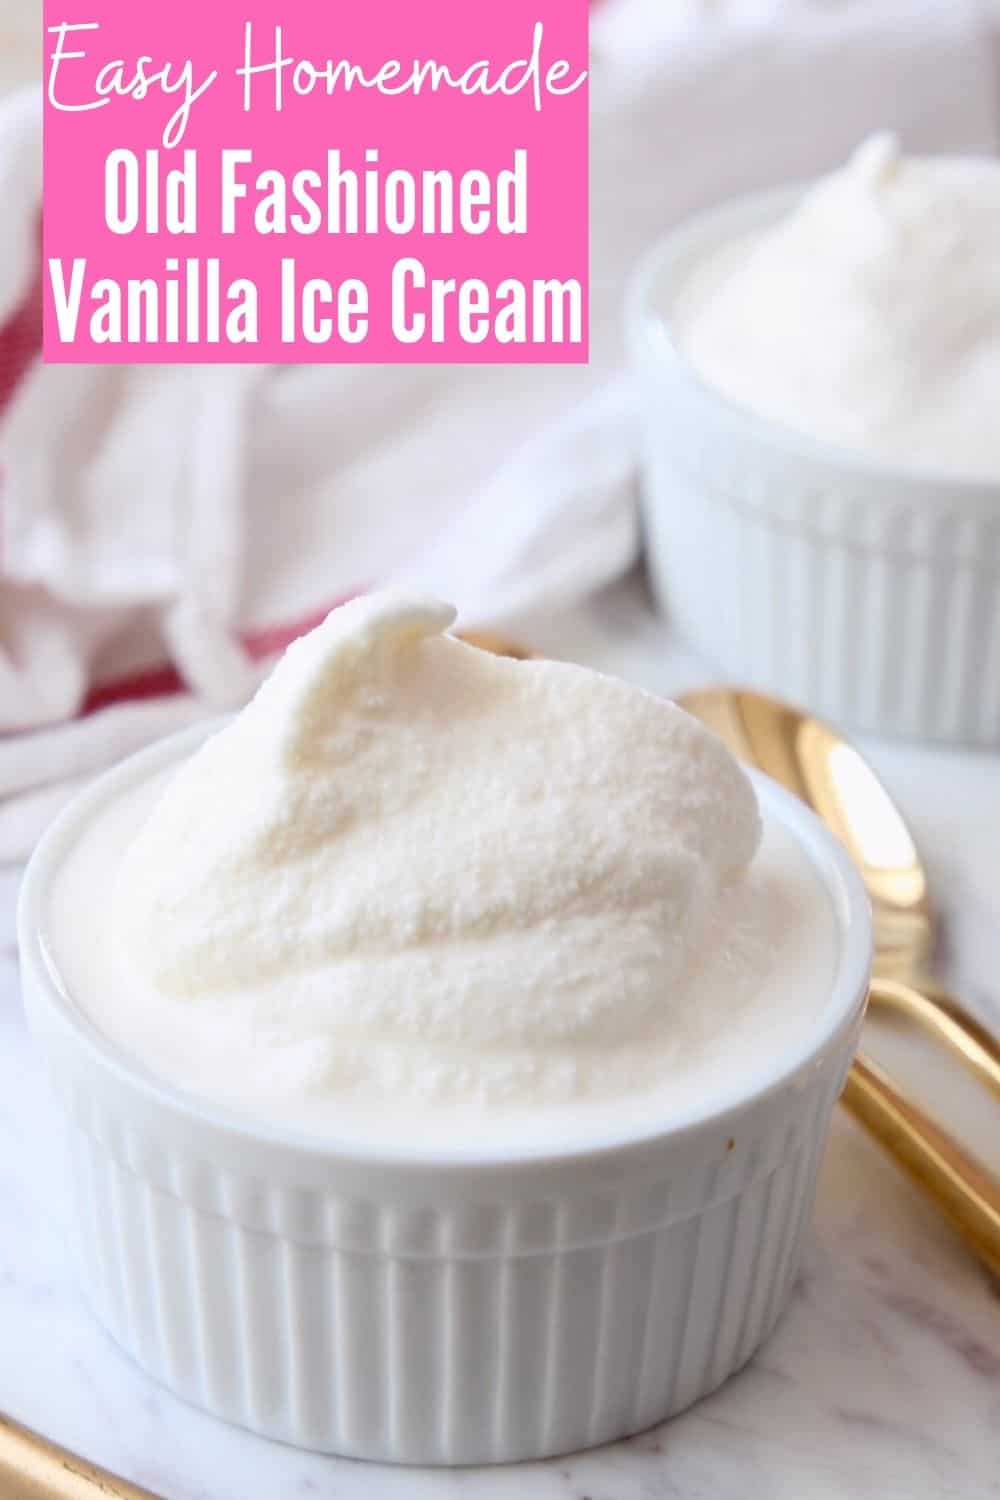 Homemade Vanilla Old Fashioned Ice Cream Recipe - WhitneyBond.com